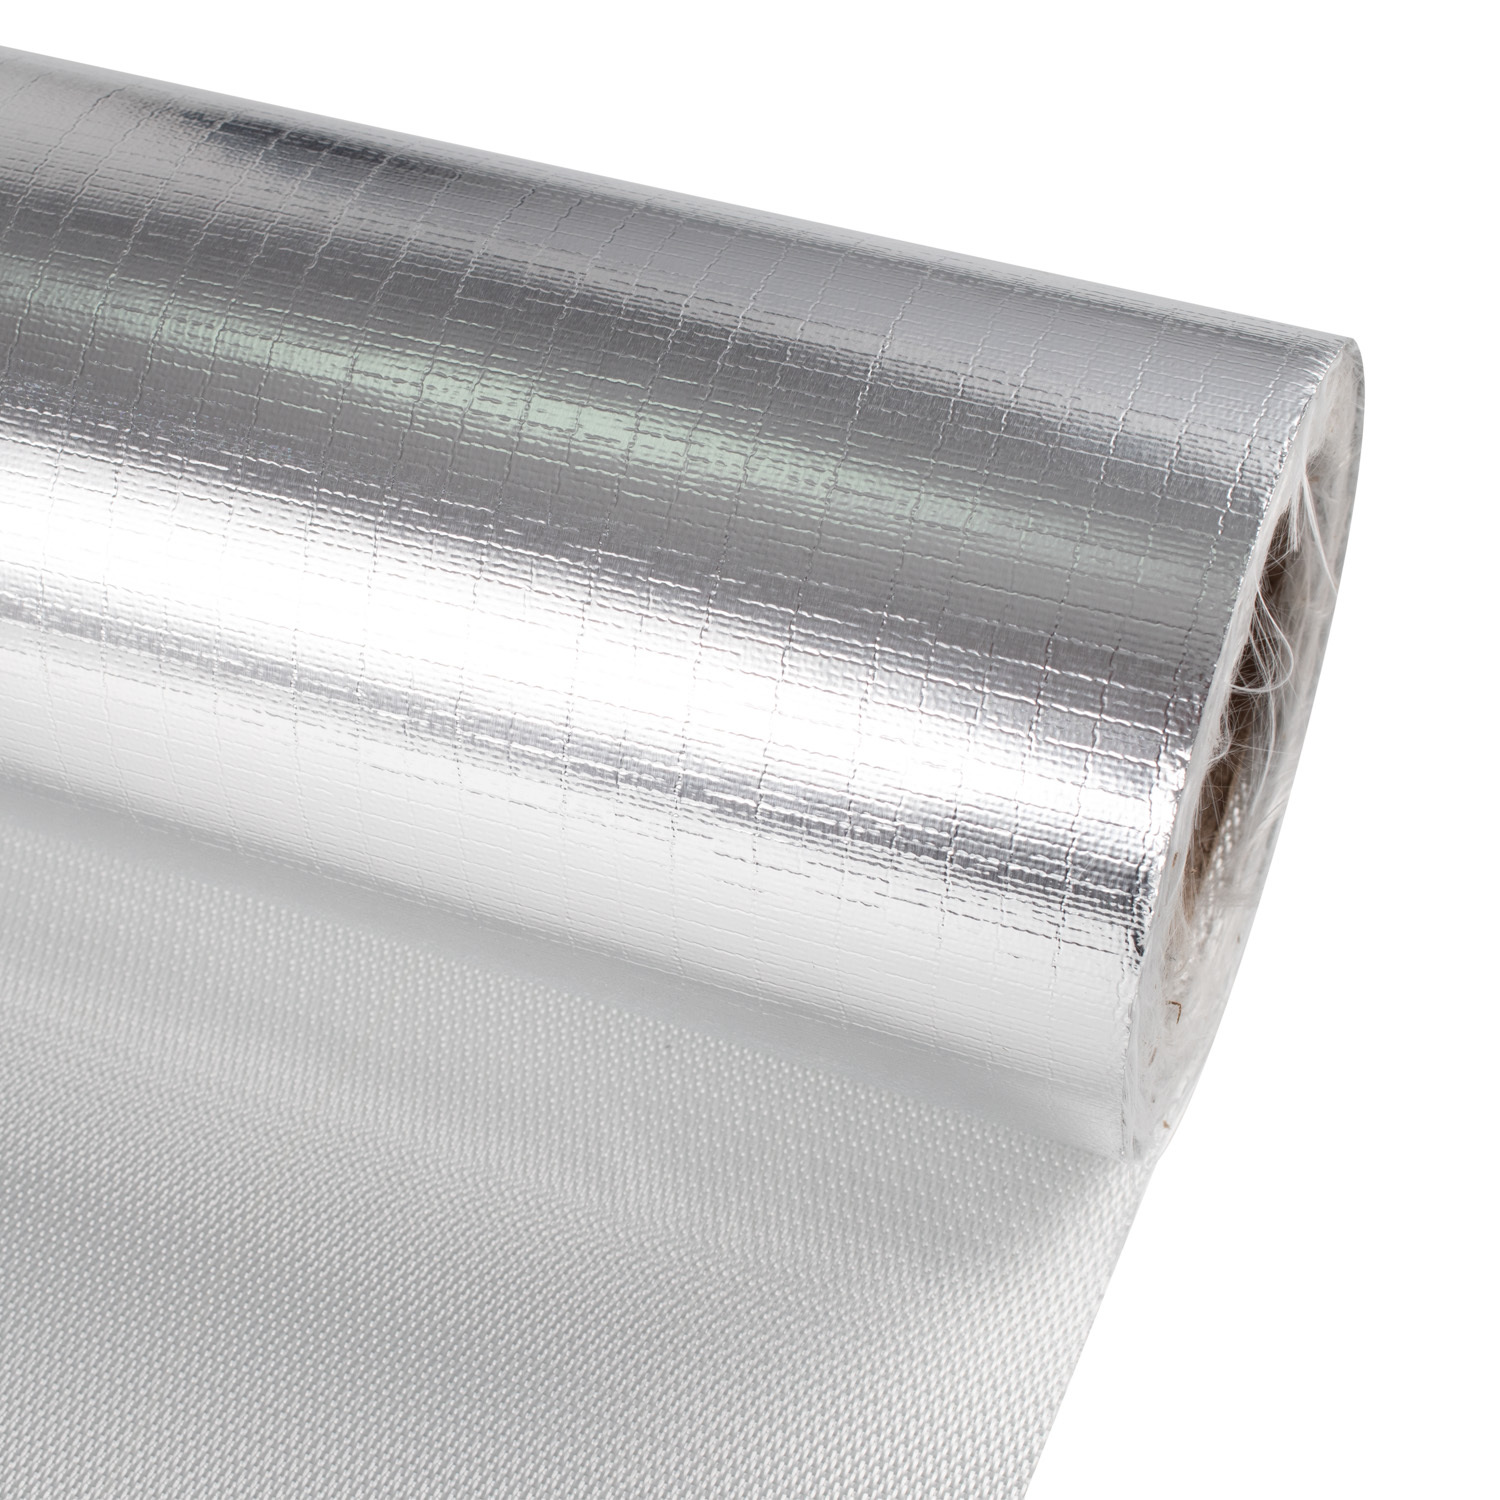 AL-3732 Aluminum foil insulation cloth